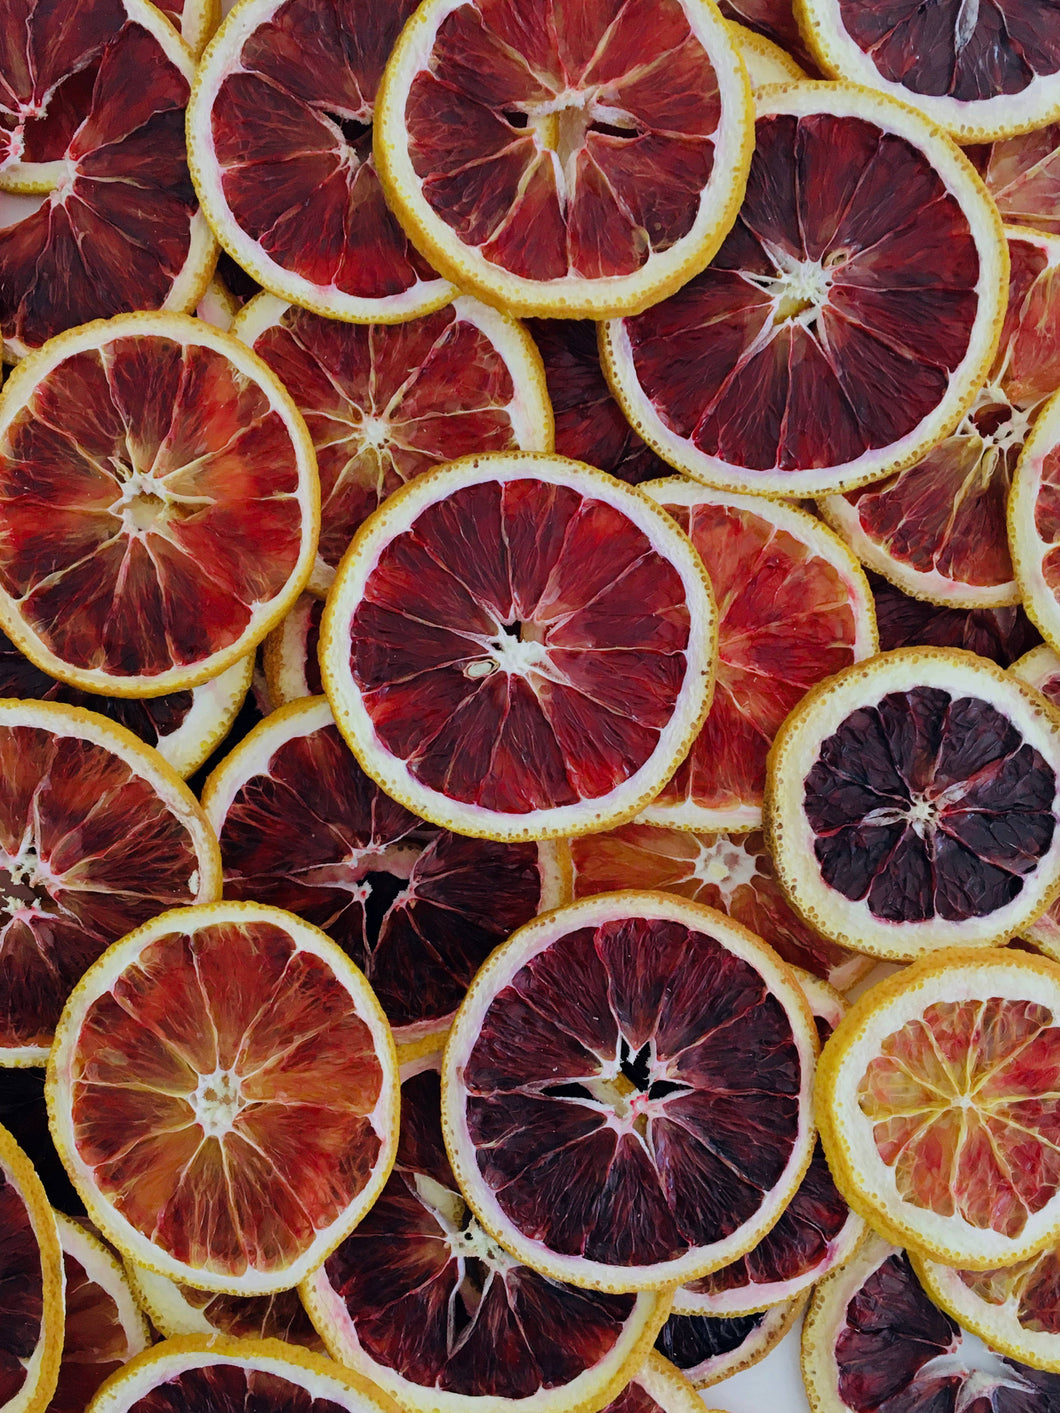 Organic Dried Blood Orange Wheels